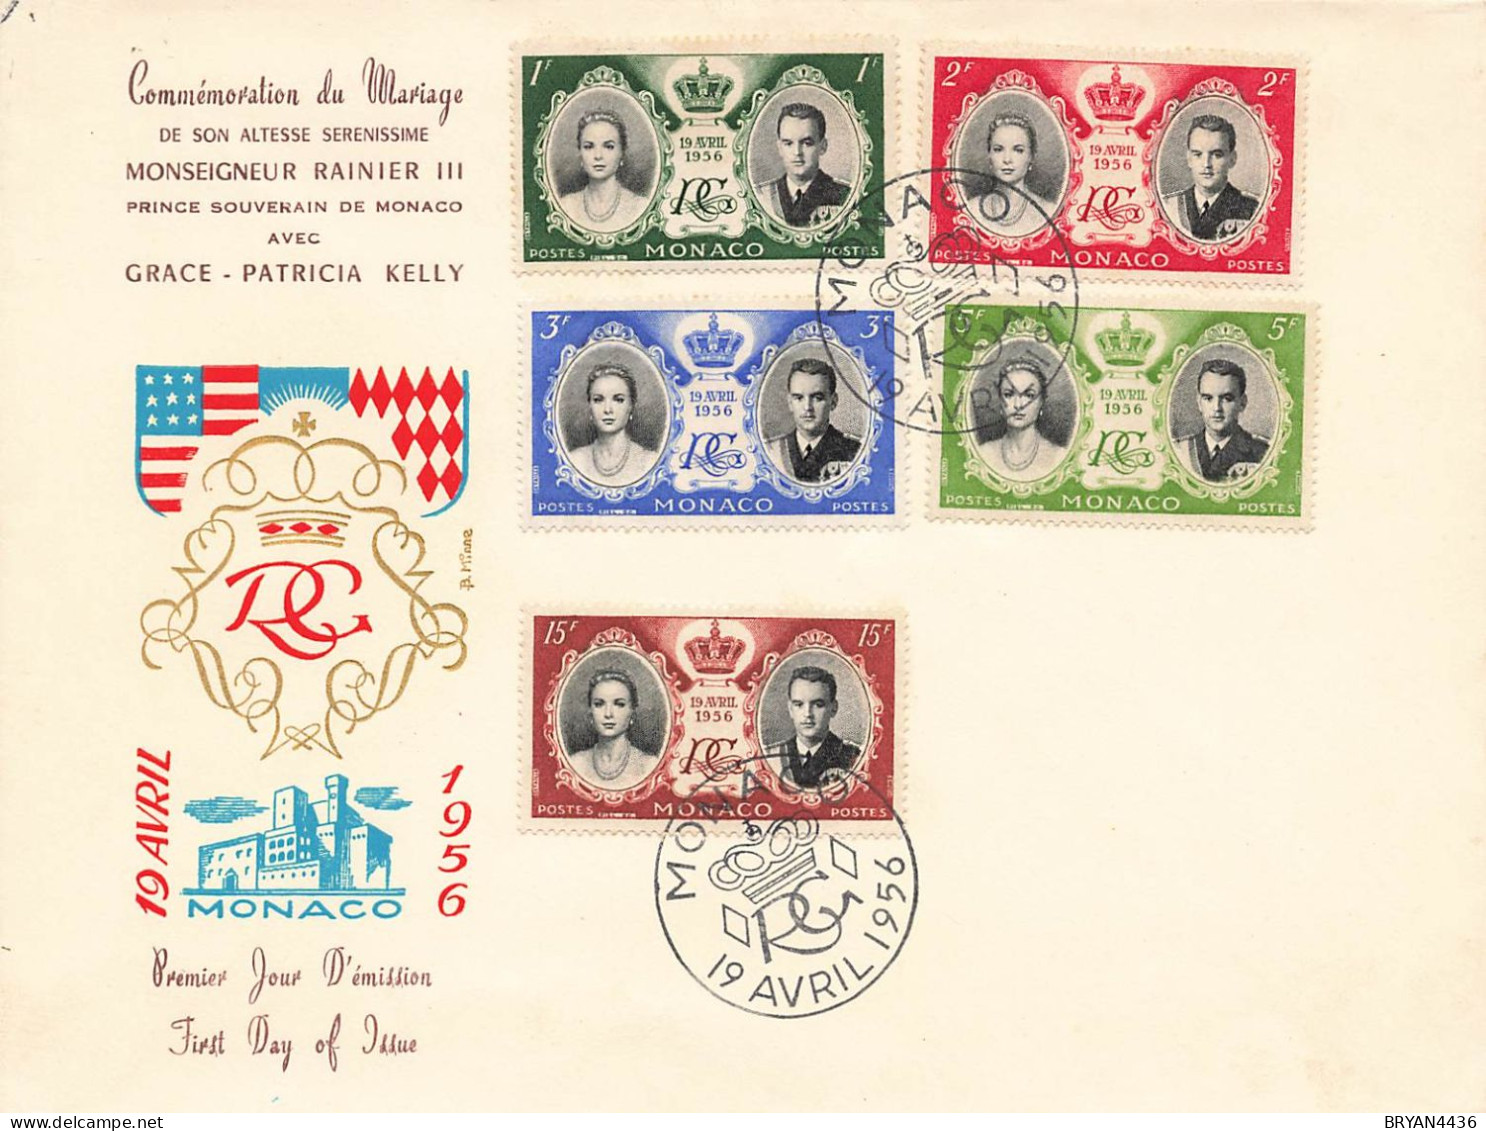 MONACO - LETTRE COMMEMORATION MARIAGE PRINCE RANIER III  Avec GRACE KELLY - 19 1VVRIL 1956 - TRES BON ETAT - Briefe U. Dokumente